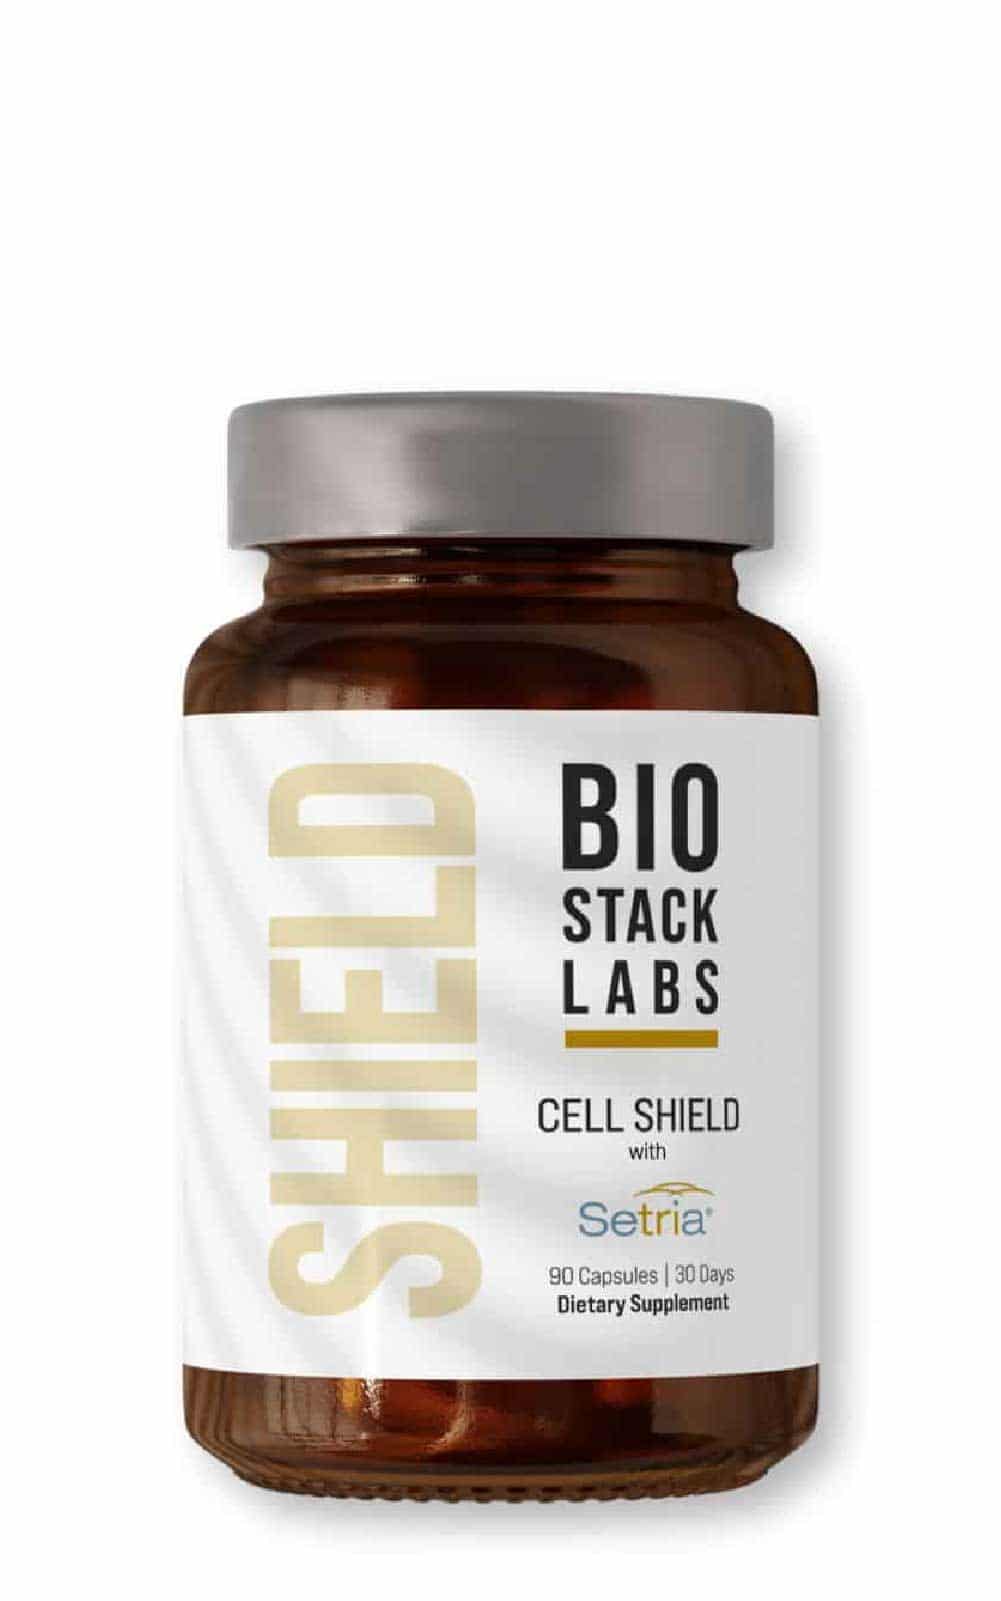 Buy Biostack Labs Cell Shield at LiveHelfi